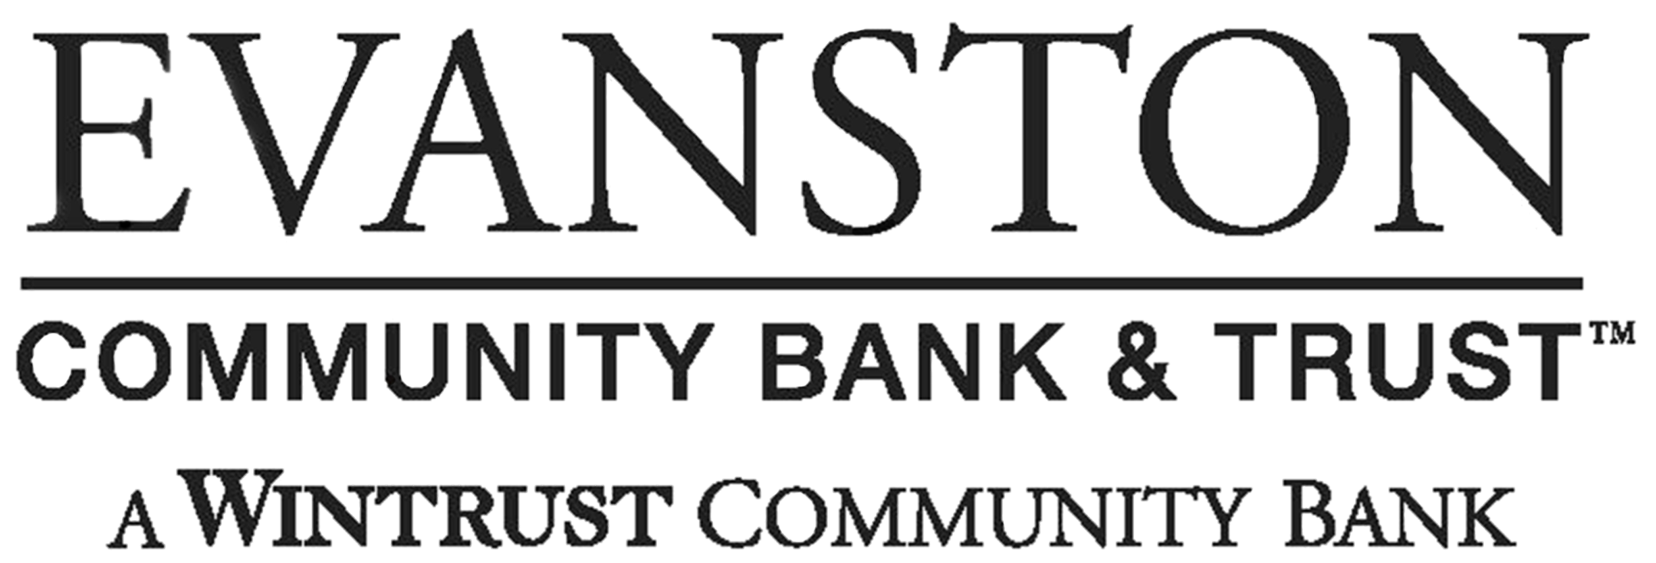 Evanston Community FB&T high quality transparent logo.png